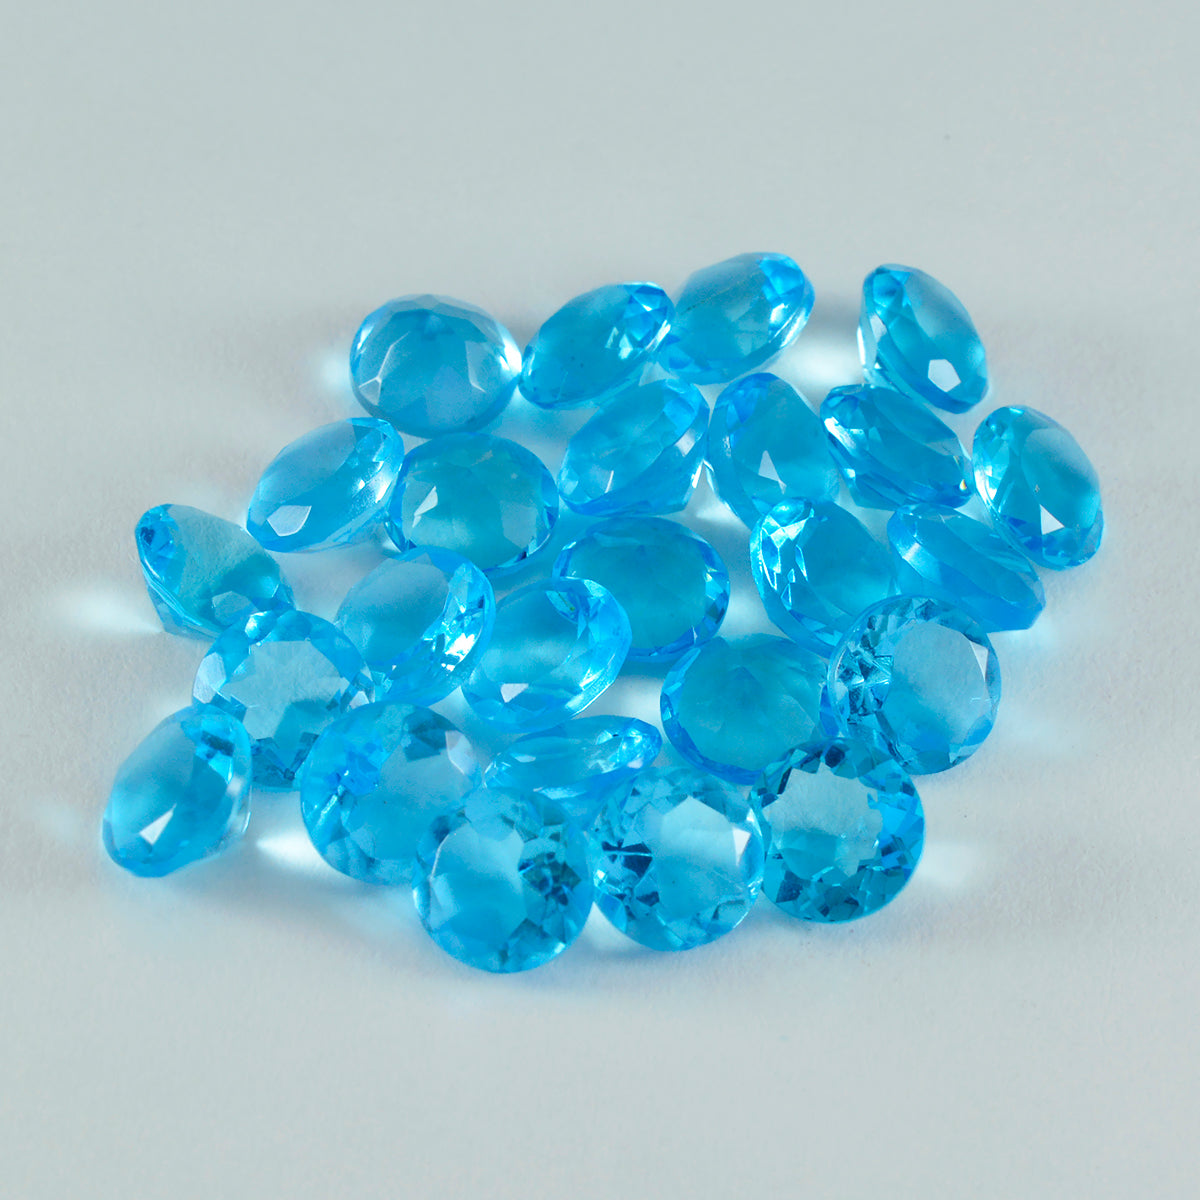 Riyogems 1PC Blue Topaz CZ gefacetteerd 6x6 mm ronde vorm schoonheid kwaliteit losse edelstenen